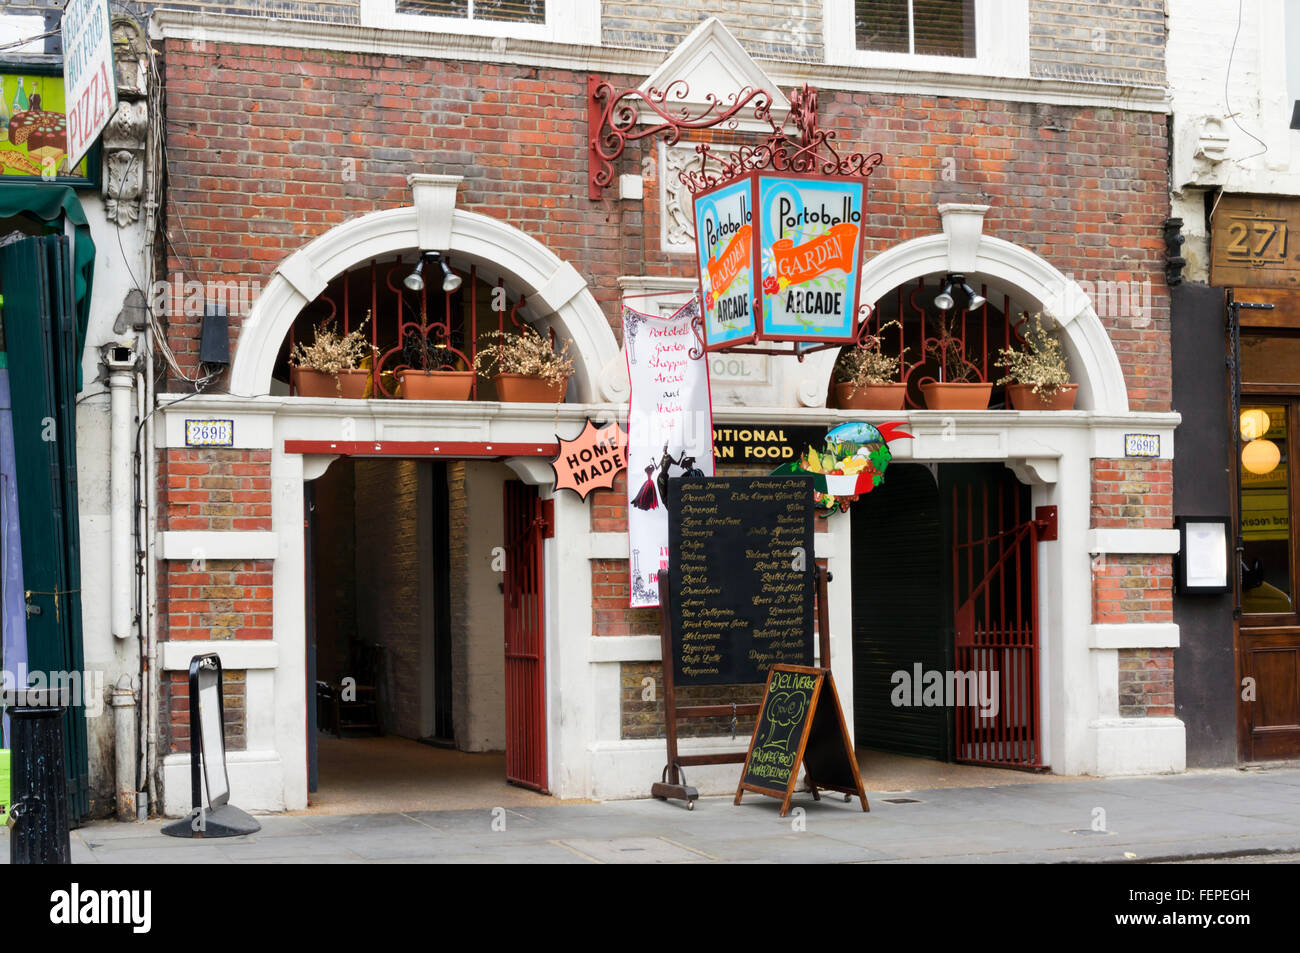 The Portobello Garden Arcade Italian restaurant in Portobello Road, London. Stock Photo